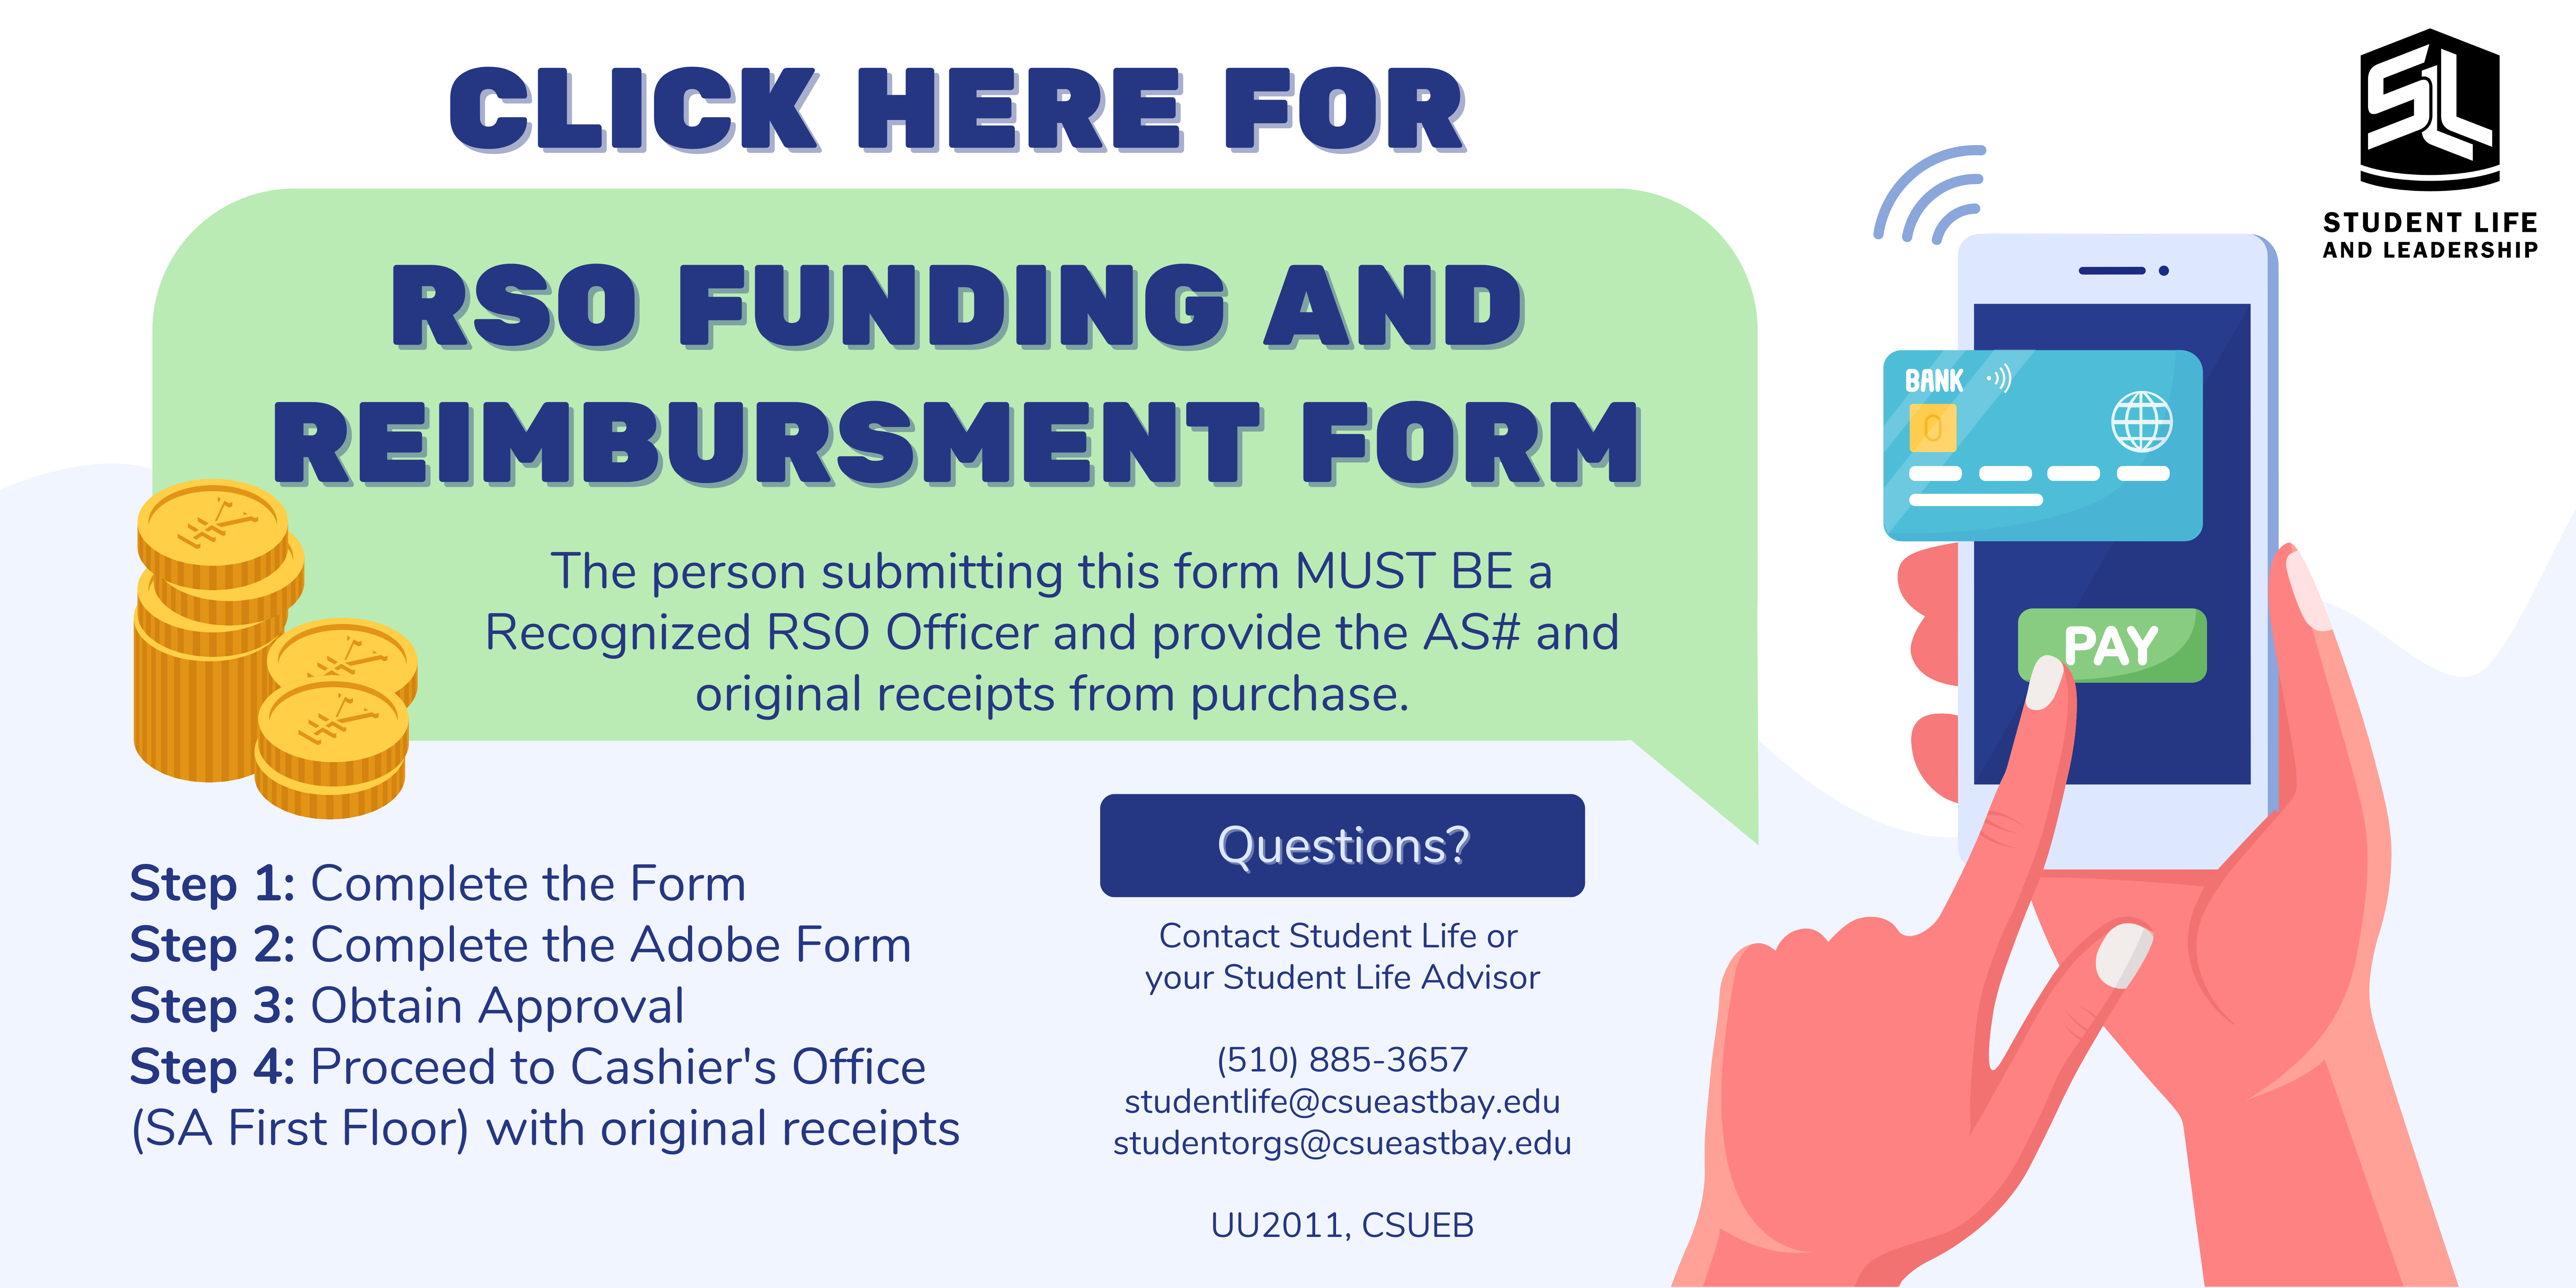 rso-fundingreimbursement-from-updated.png